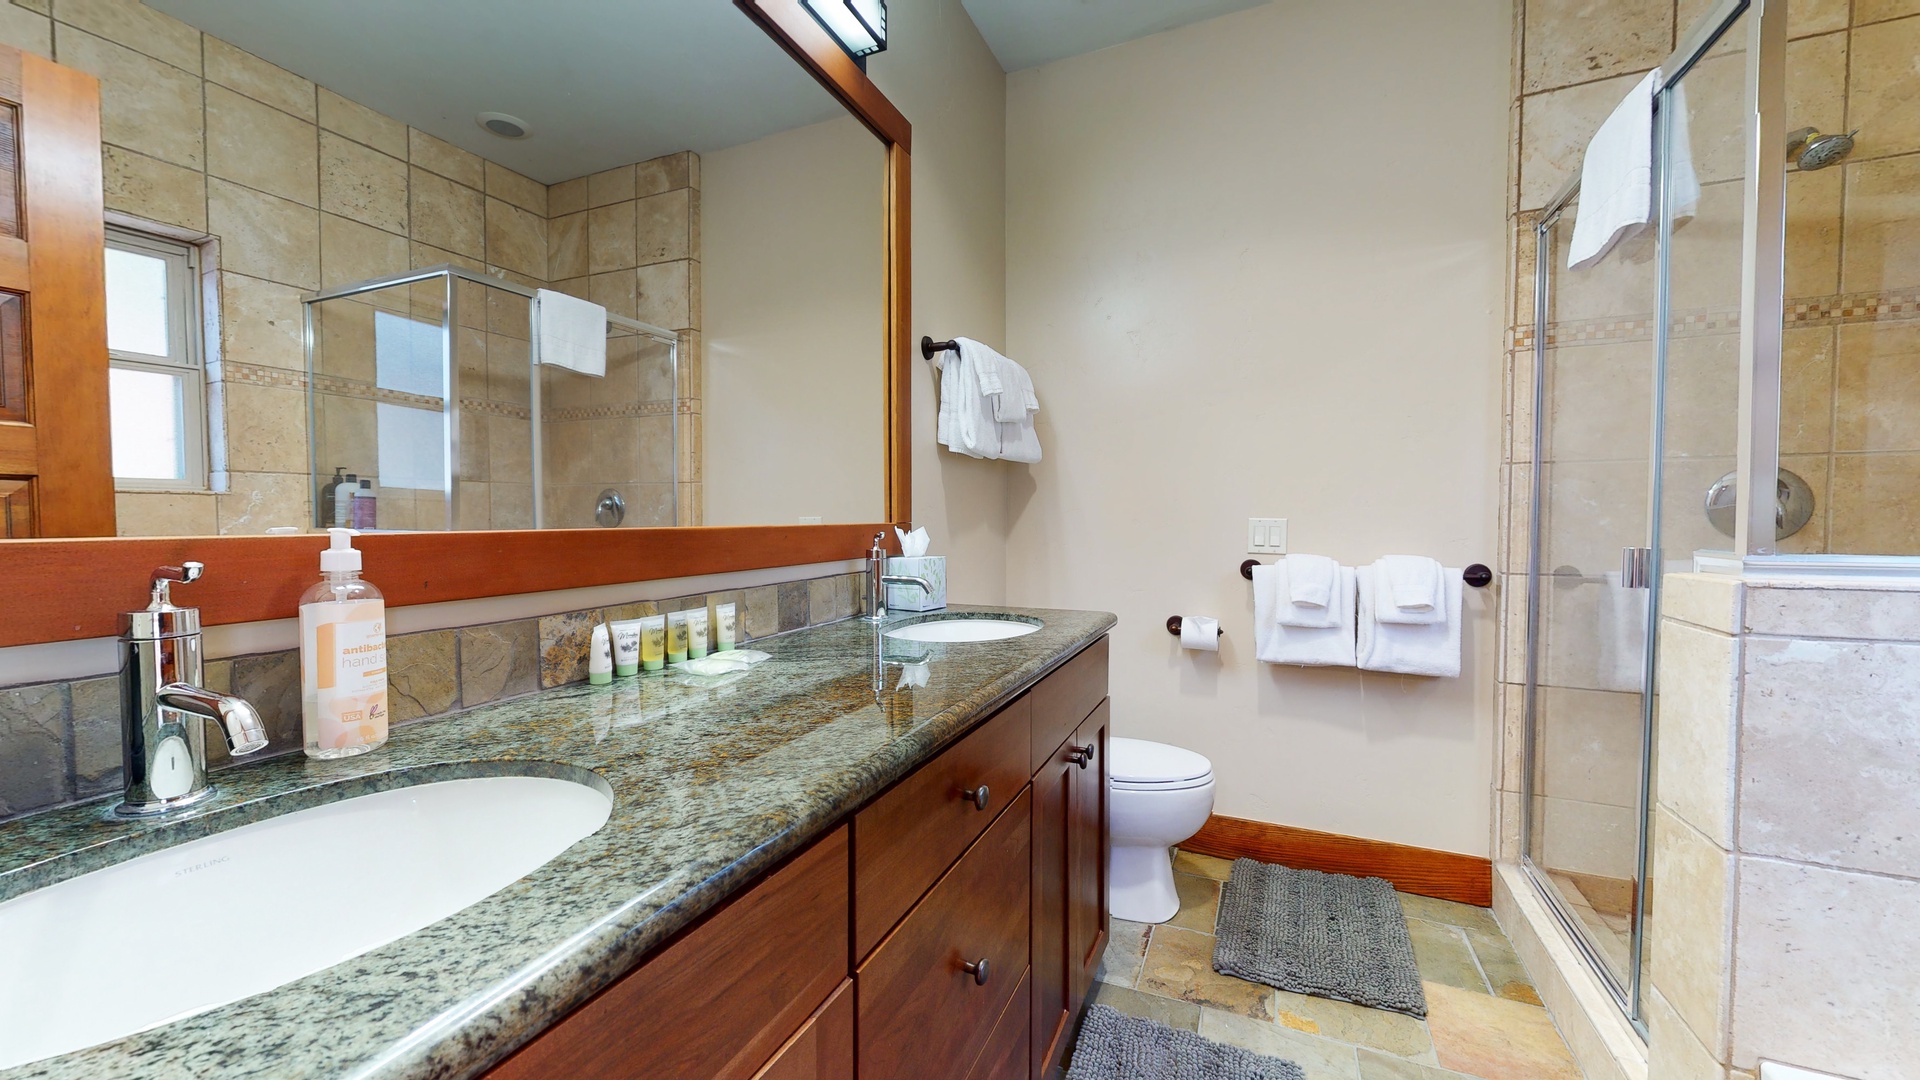 En suite bathroom with soaking tub, standing shower and dual sinks